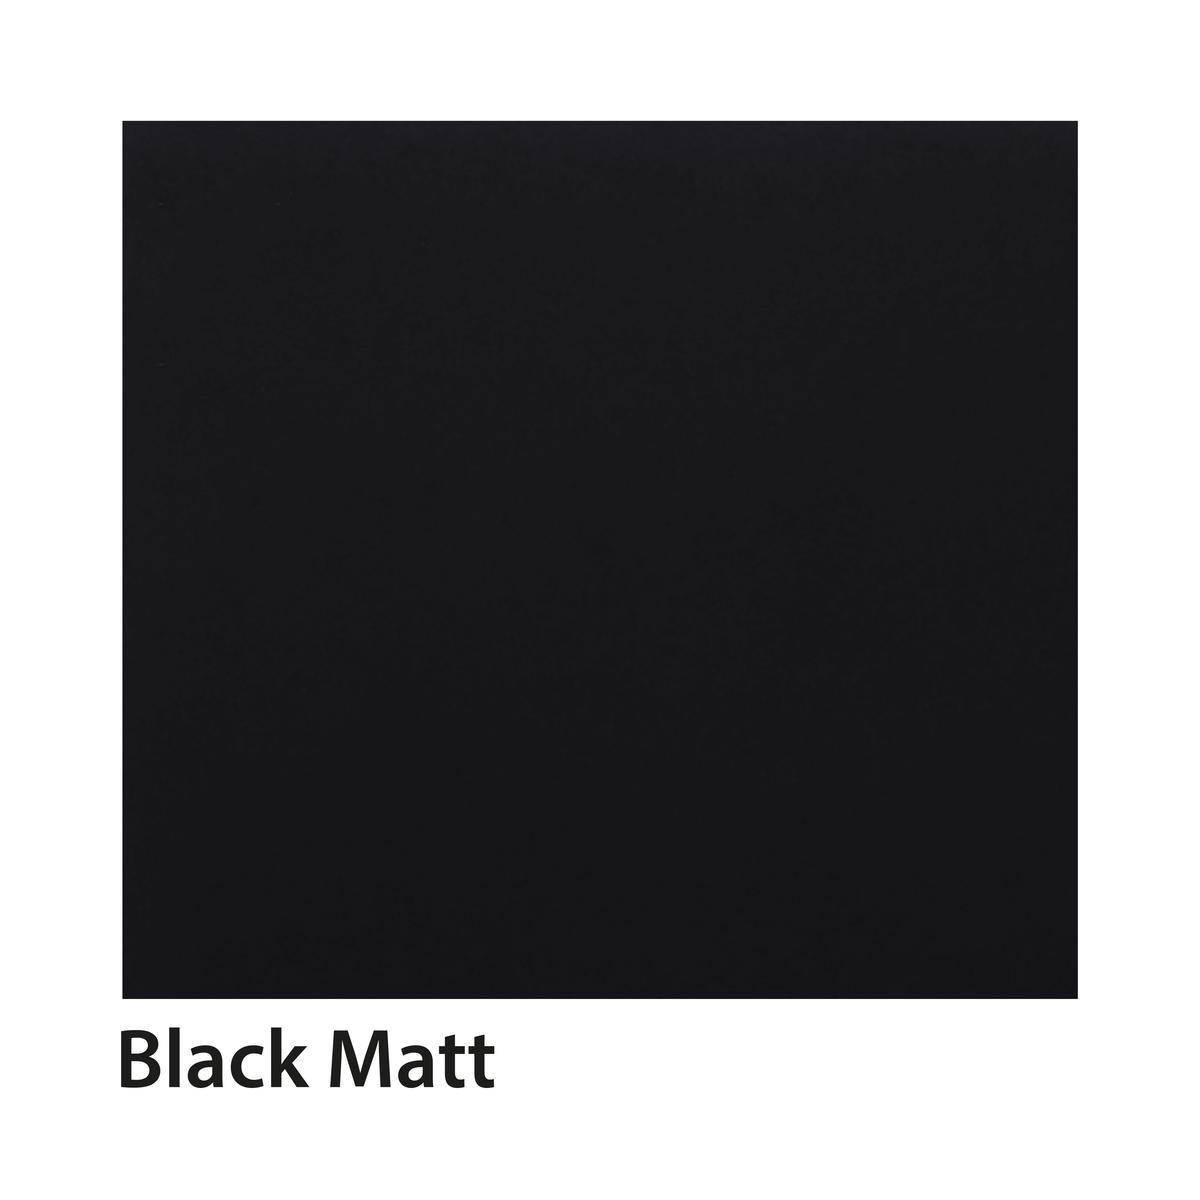 Donica Daydreamer Black Matt Poli 10 cm Donica Czarna Matowa Poli 10 cm nr. 4